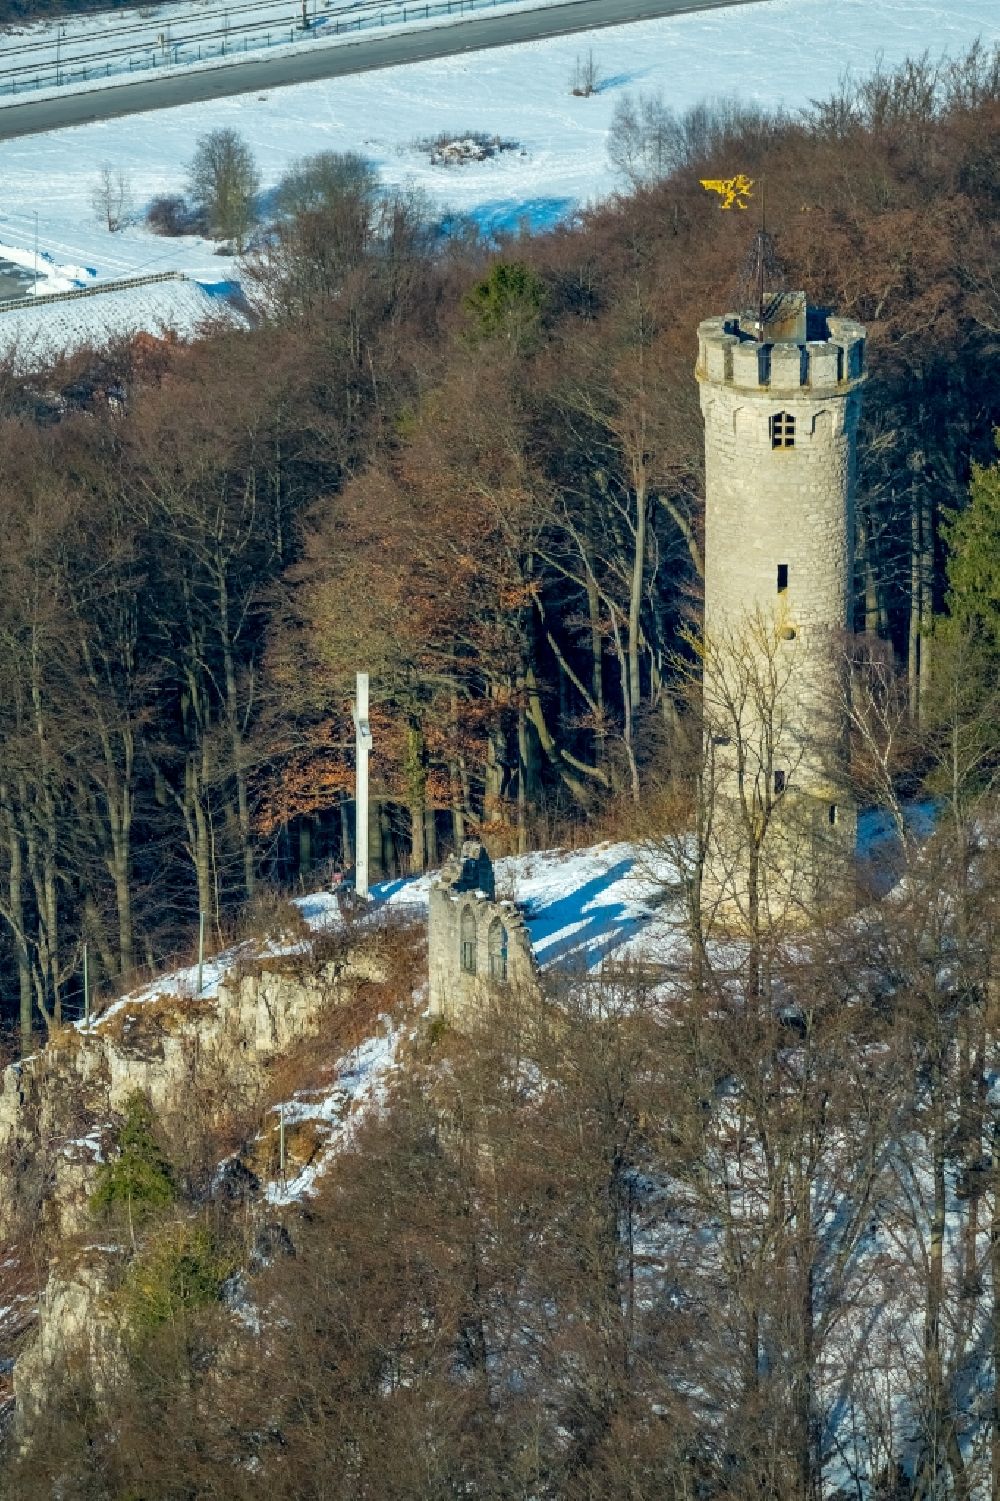 Aerial image Marsberg - Wintry snowy structure of the observation tower Bilsteinturm in Marsberg in the state North Rhine-Westphalia